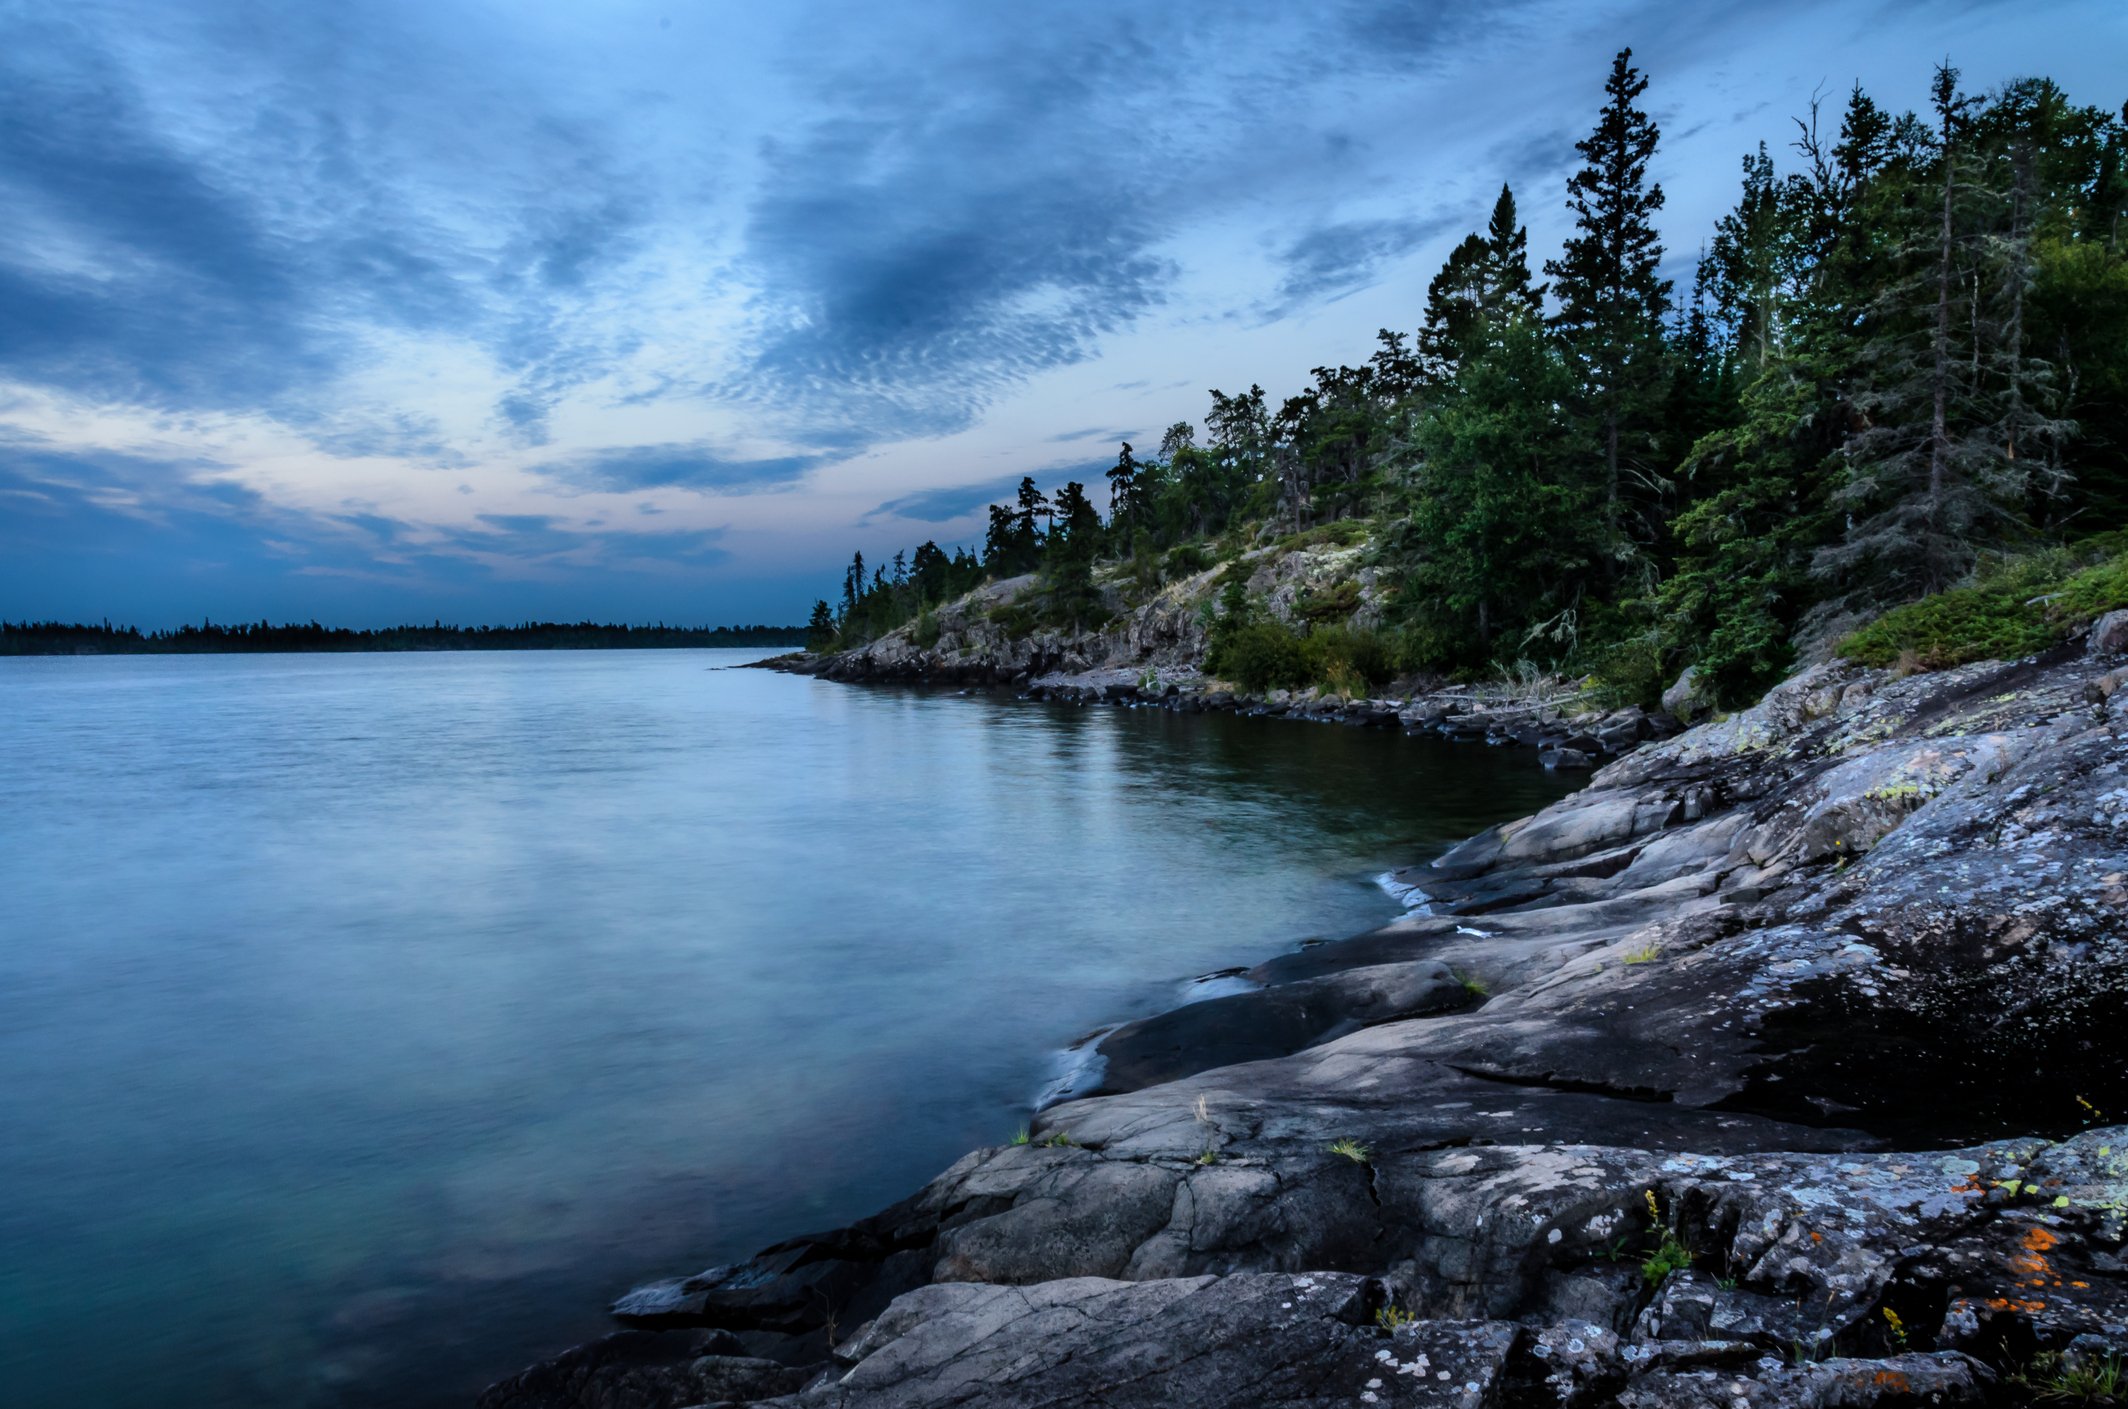 Какие озера входят в великие американские озера. Верхнее озеро (Lake Superior). Канада. Озеро сьюпериор Канада. Великие американские озёра верхнее Гурон Мичиган Эри Онтарио. Озеро Онтарио Северная Америка.